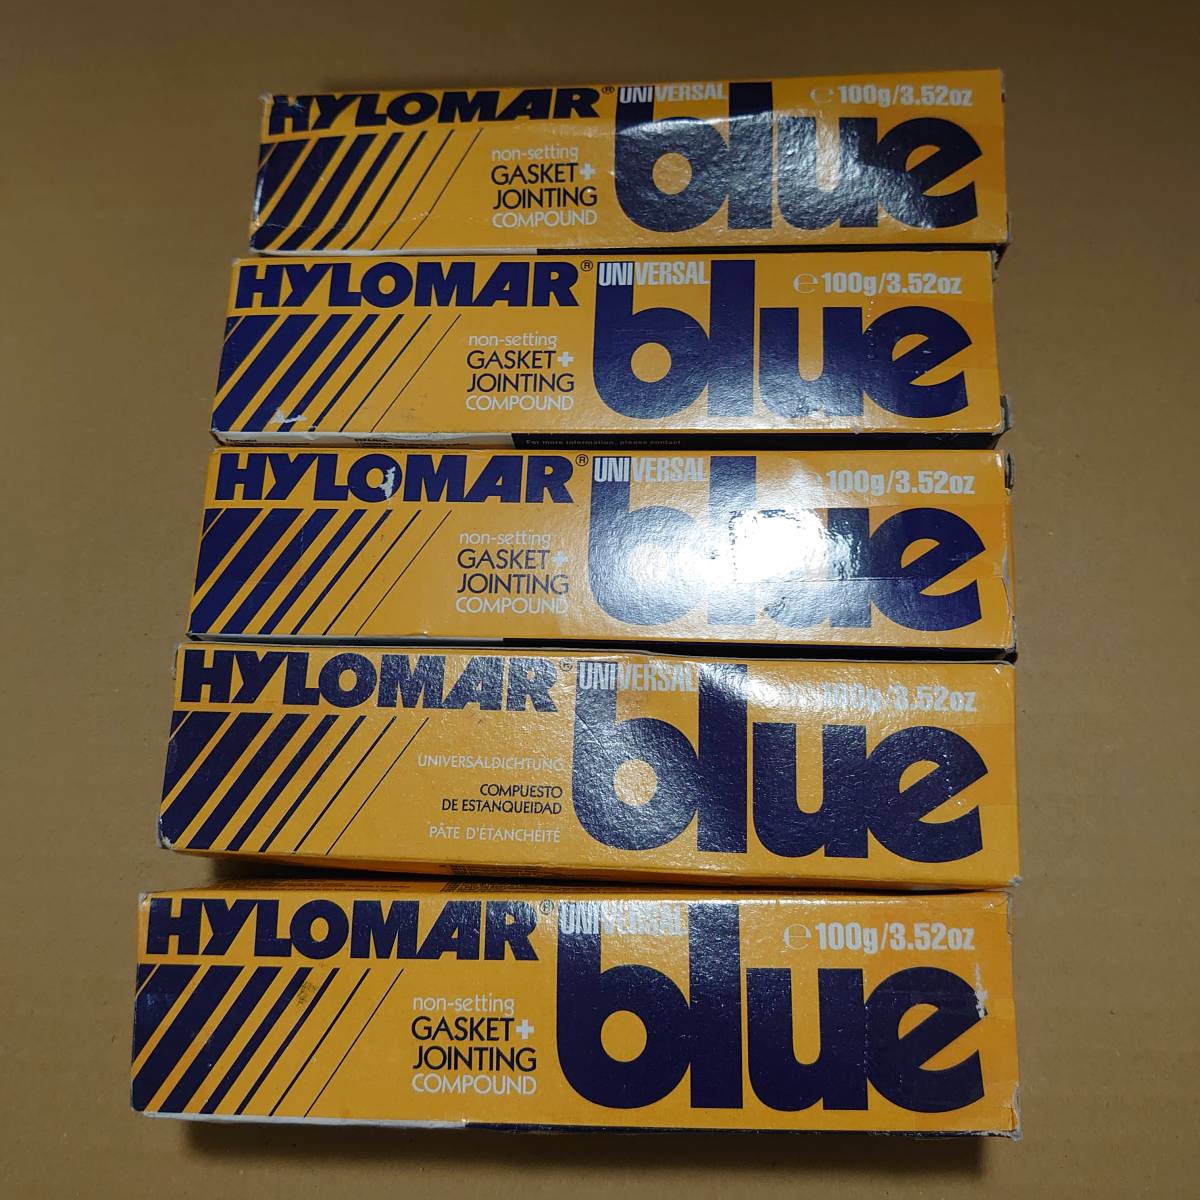 Hylomar(ハイロマー) 液状ガスケット ユニバーサルブルー 100g STRAIGHT/36-6100 【新品】の画像1